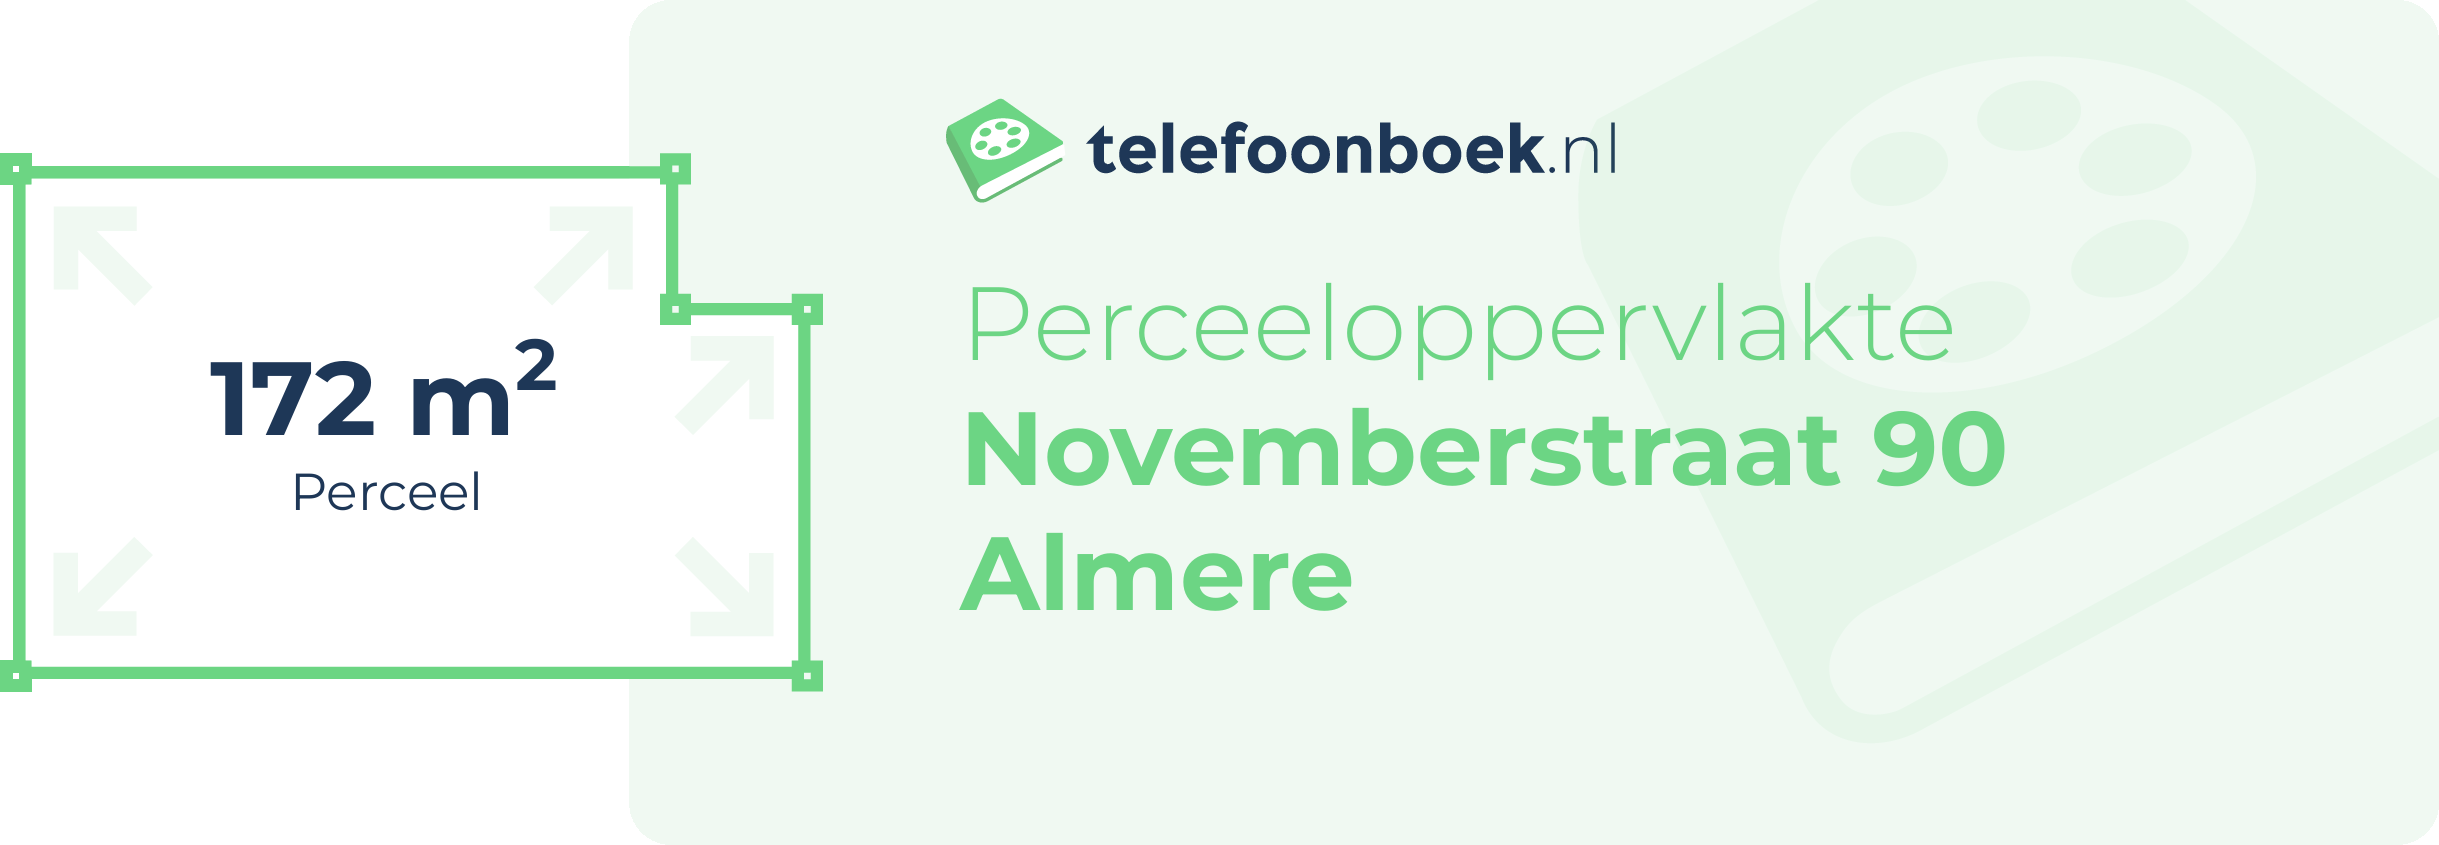 Perceeloppervlakte Novemberstraat 90 Almere